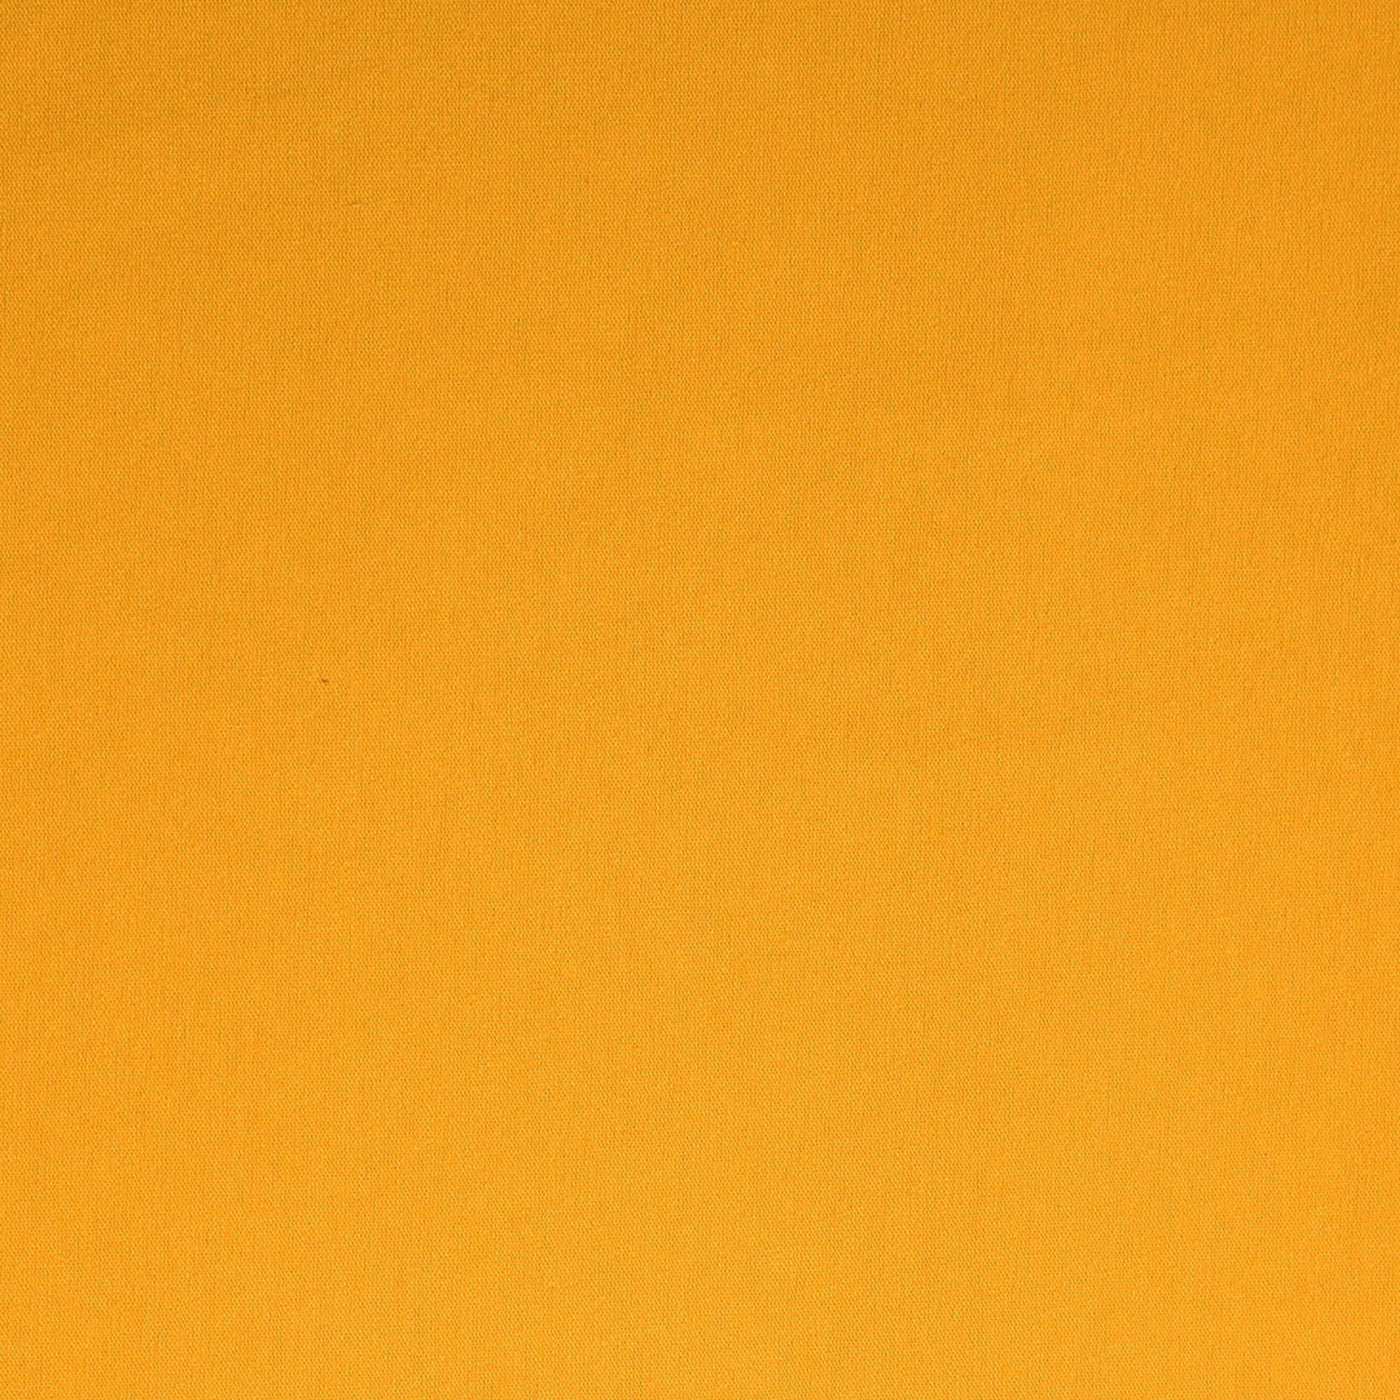 Cotton Lycra Spandex Knit Jersey by the yard -12 oz - Mustard - FabricLA.com